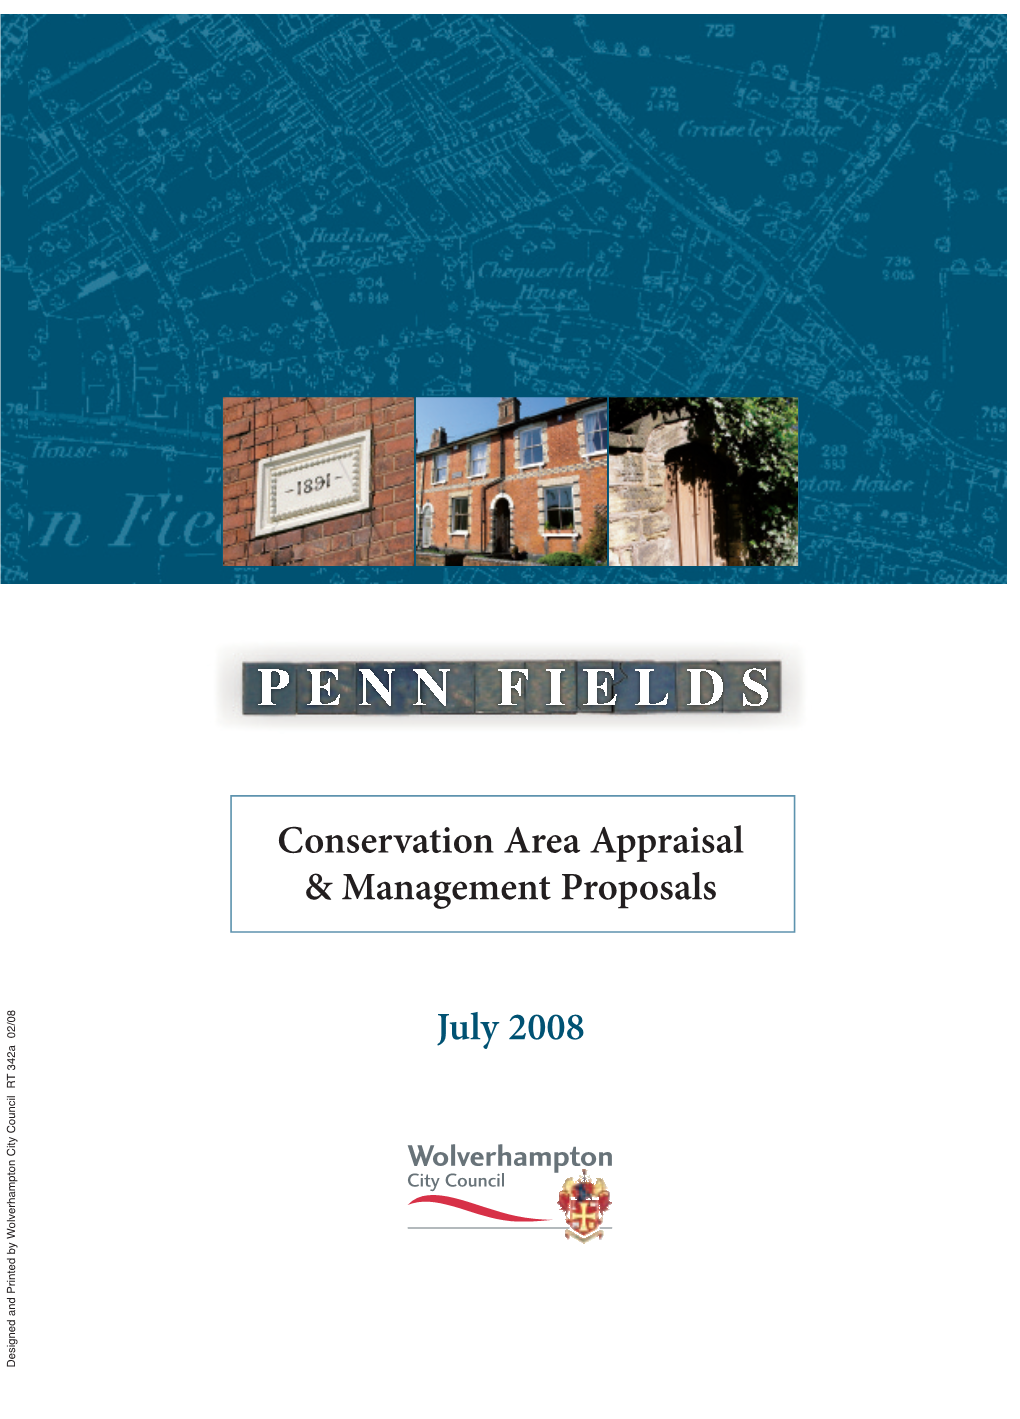 Conservation Area Appraisal & Management Proposals July 2008